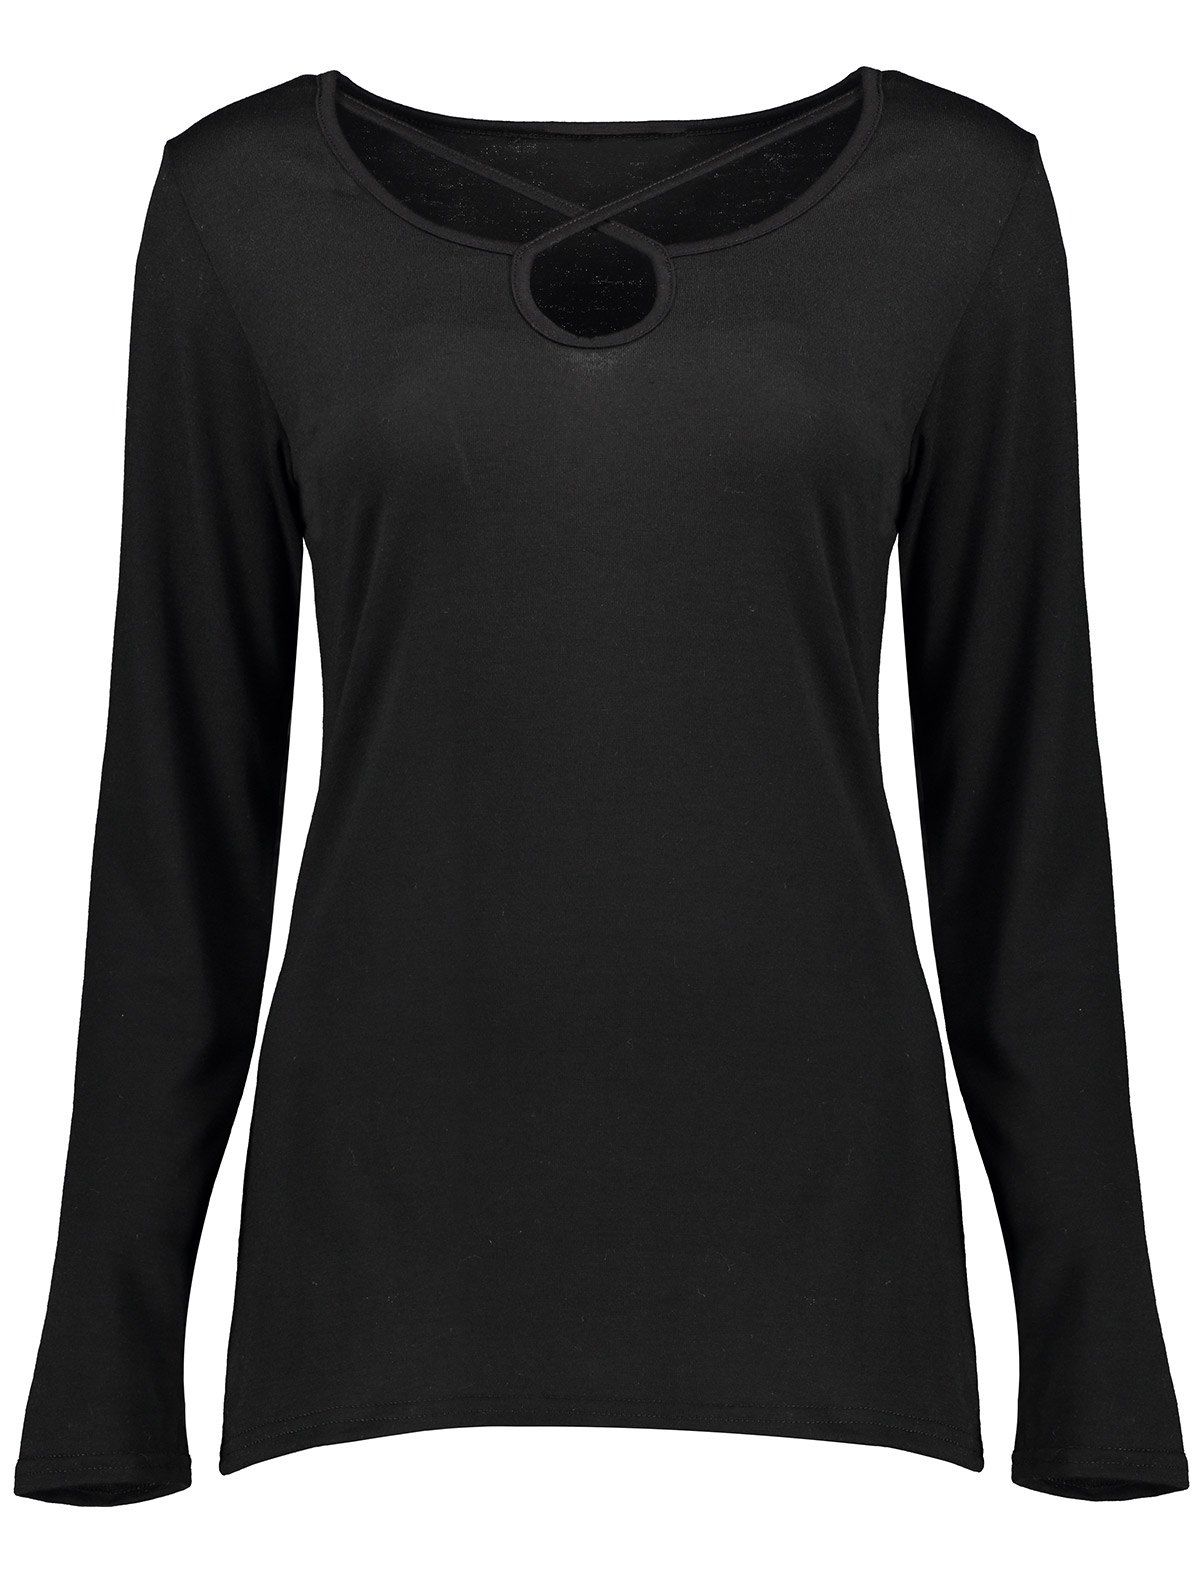 [41% OFF] 2020 Long Sleeve Criss Cross T-Shirt In BLACK | DressLily